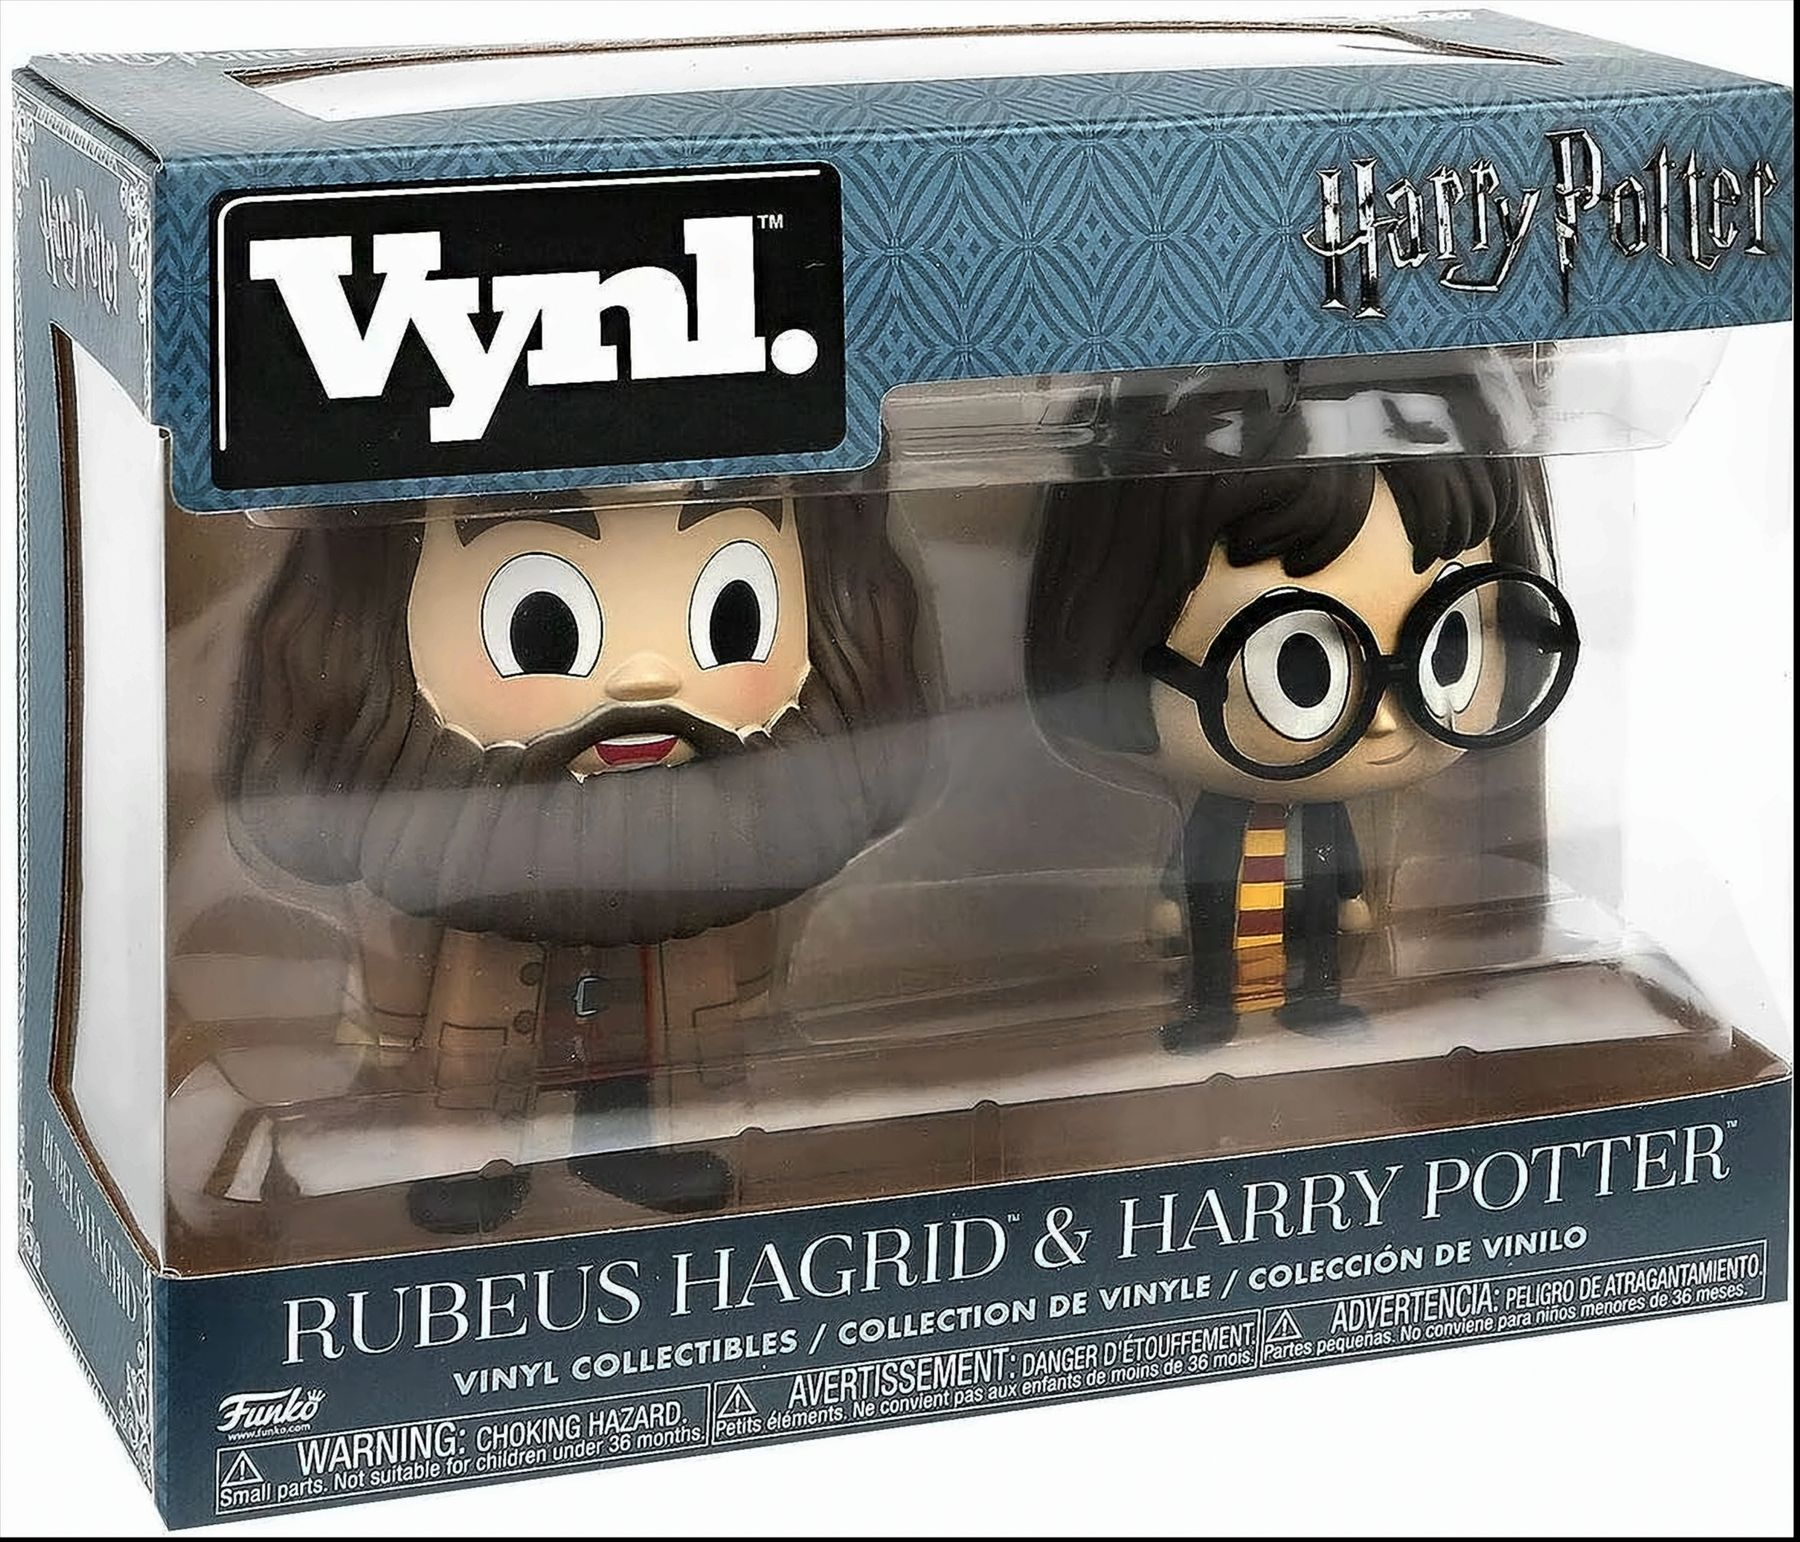 Potter Harry Vynl. Potter Harry Rubeus & Hagrid -